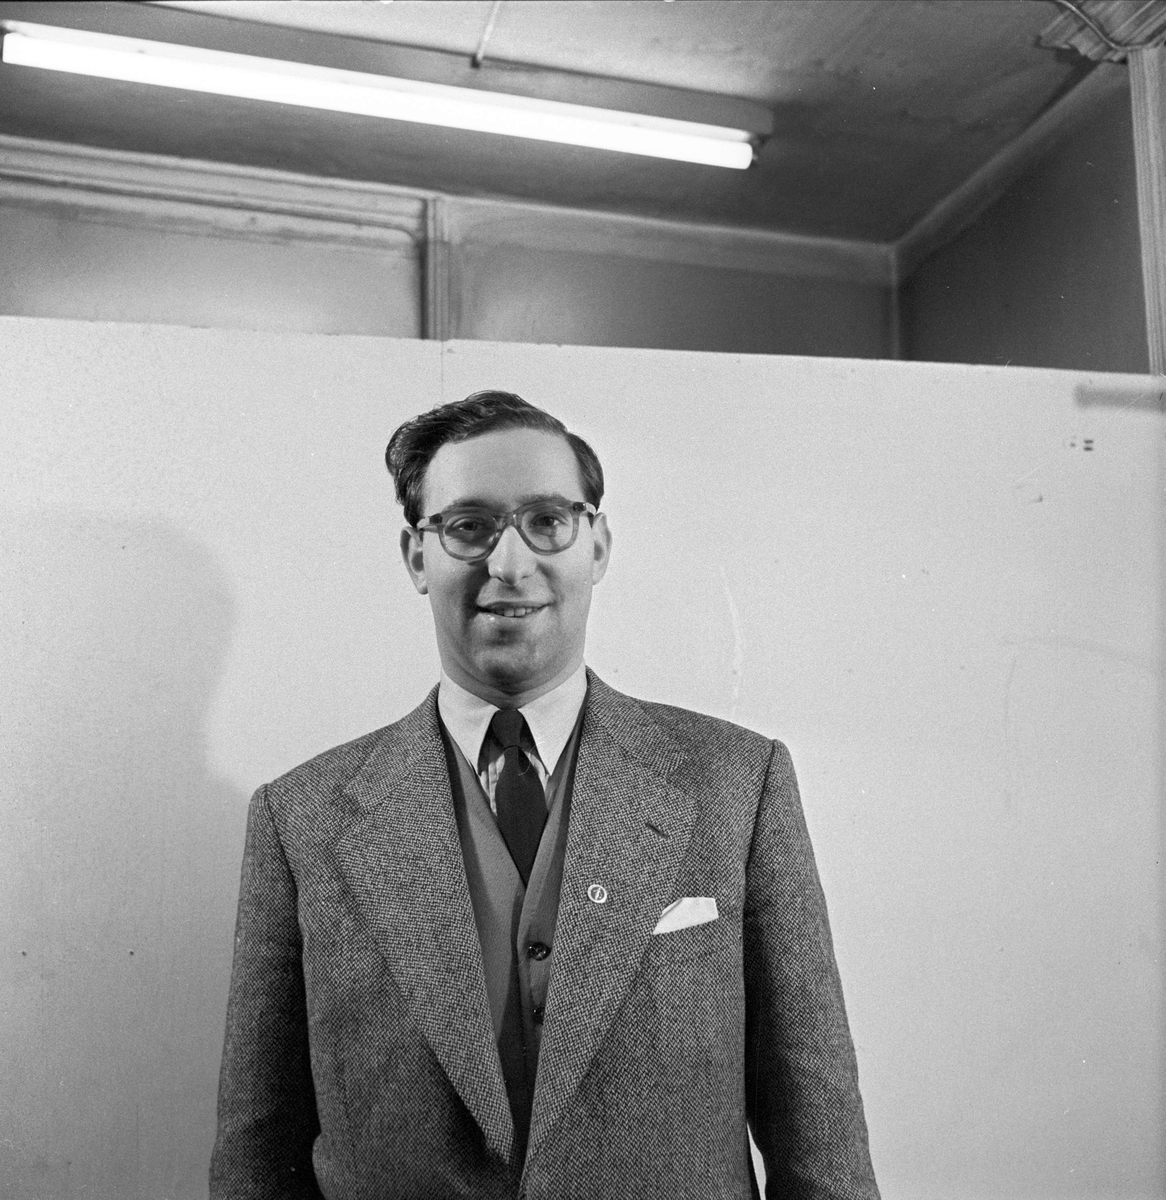 Oslo, desember 1955, Willy Broch, ny formann i Oslo Unge Venstre.